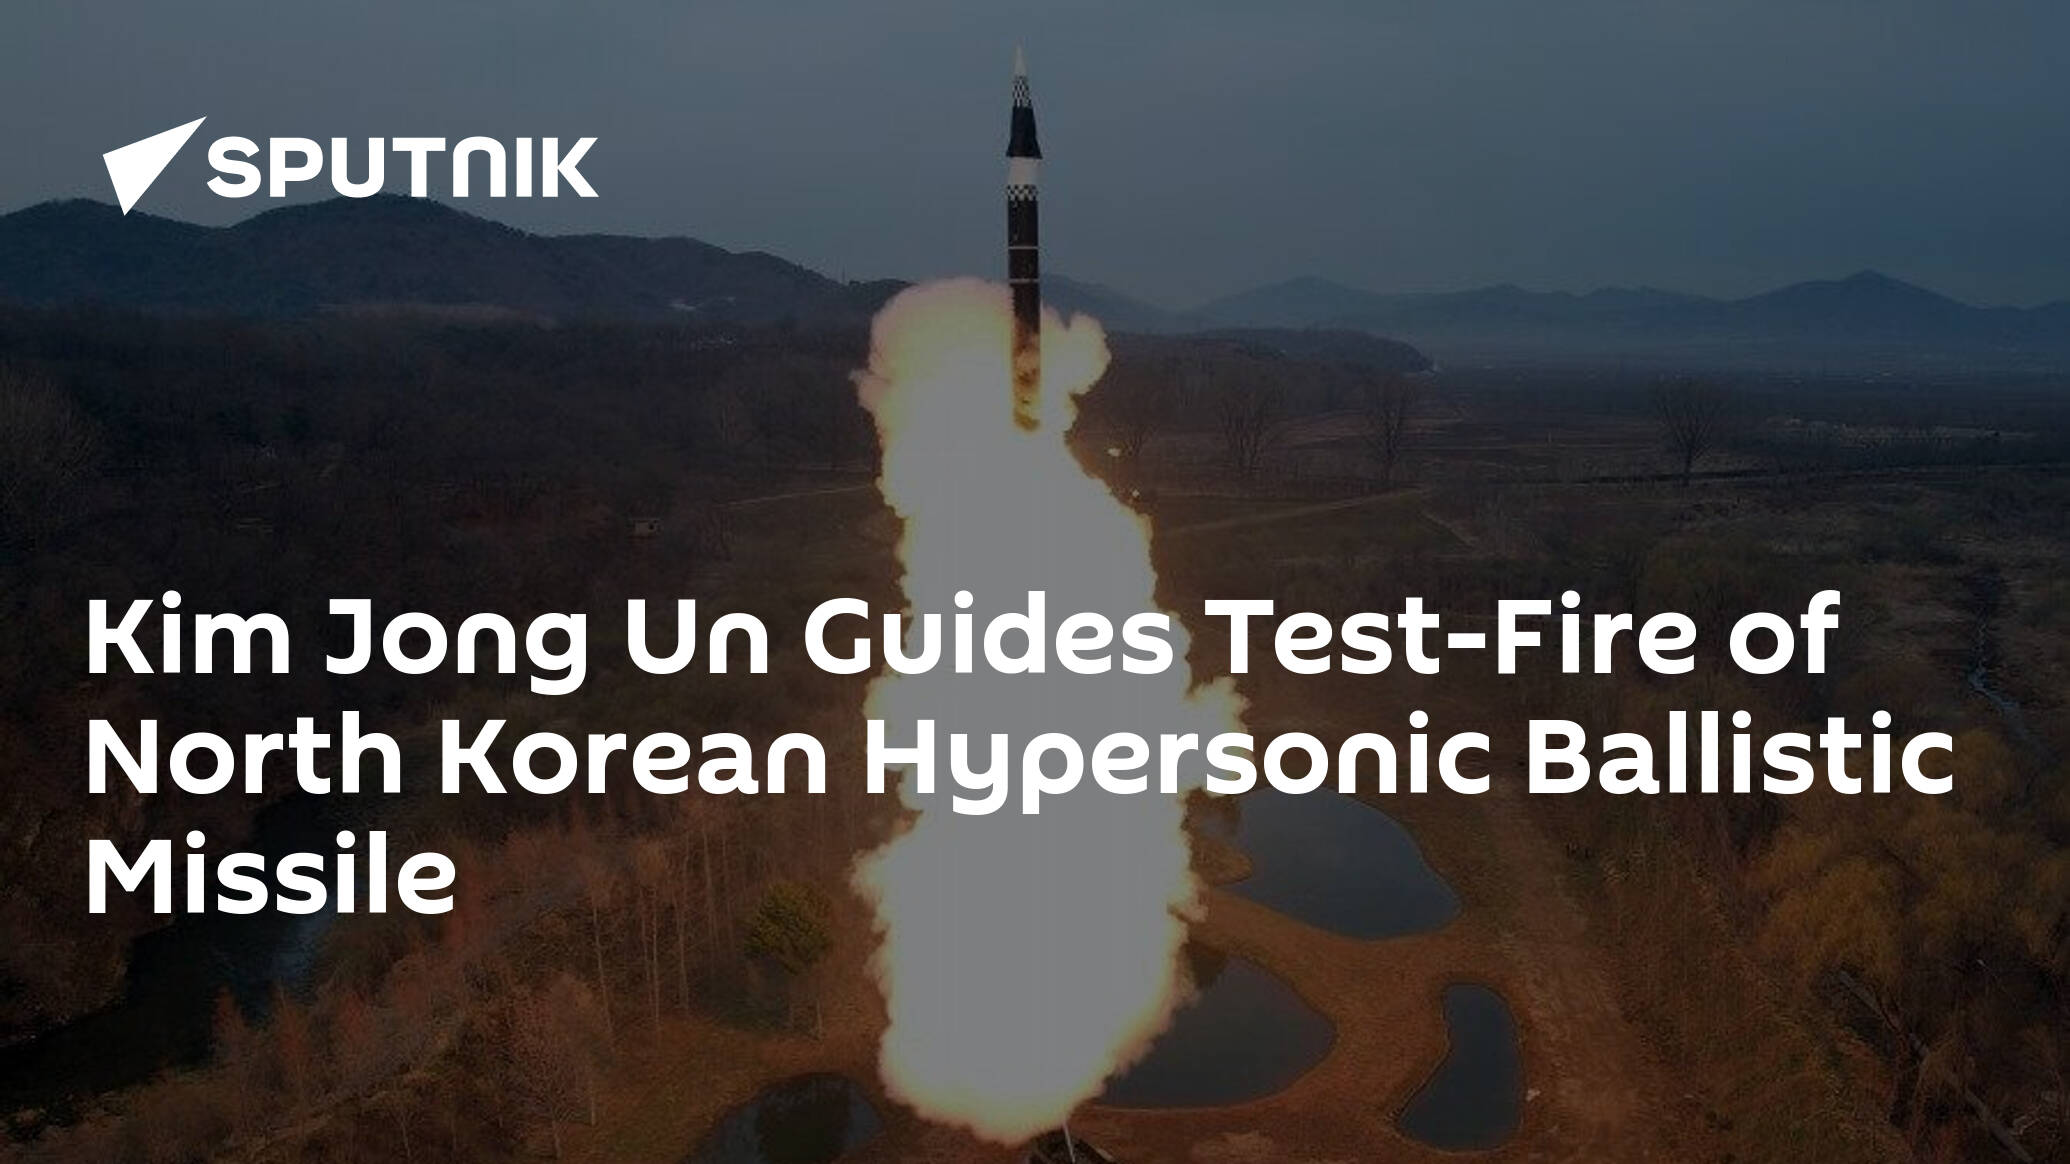 Kim Jong Un Guides Test-Fire of North Korean Hypersonic Ballistic Missile